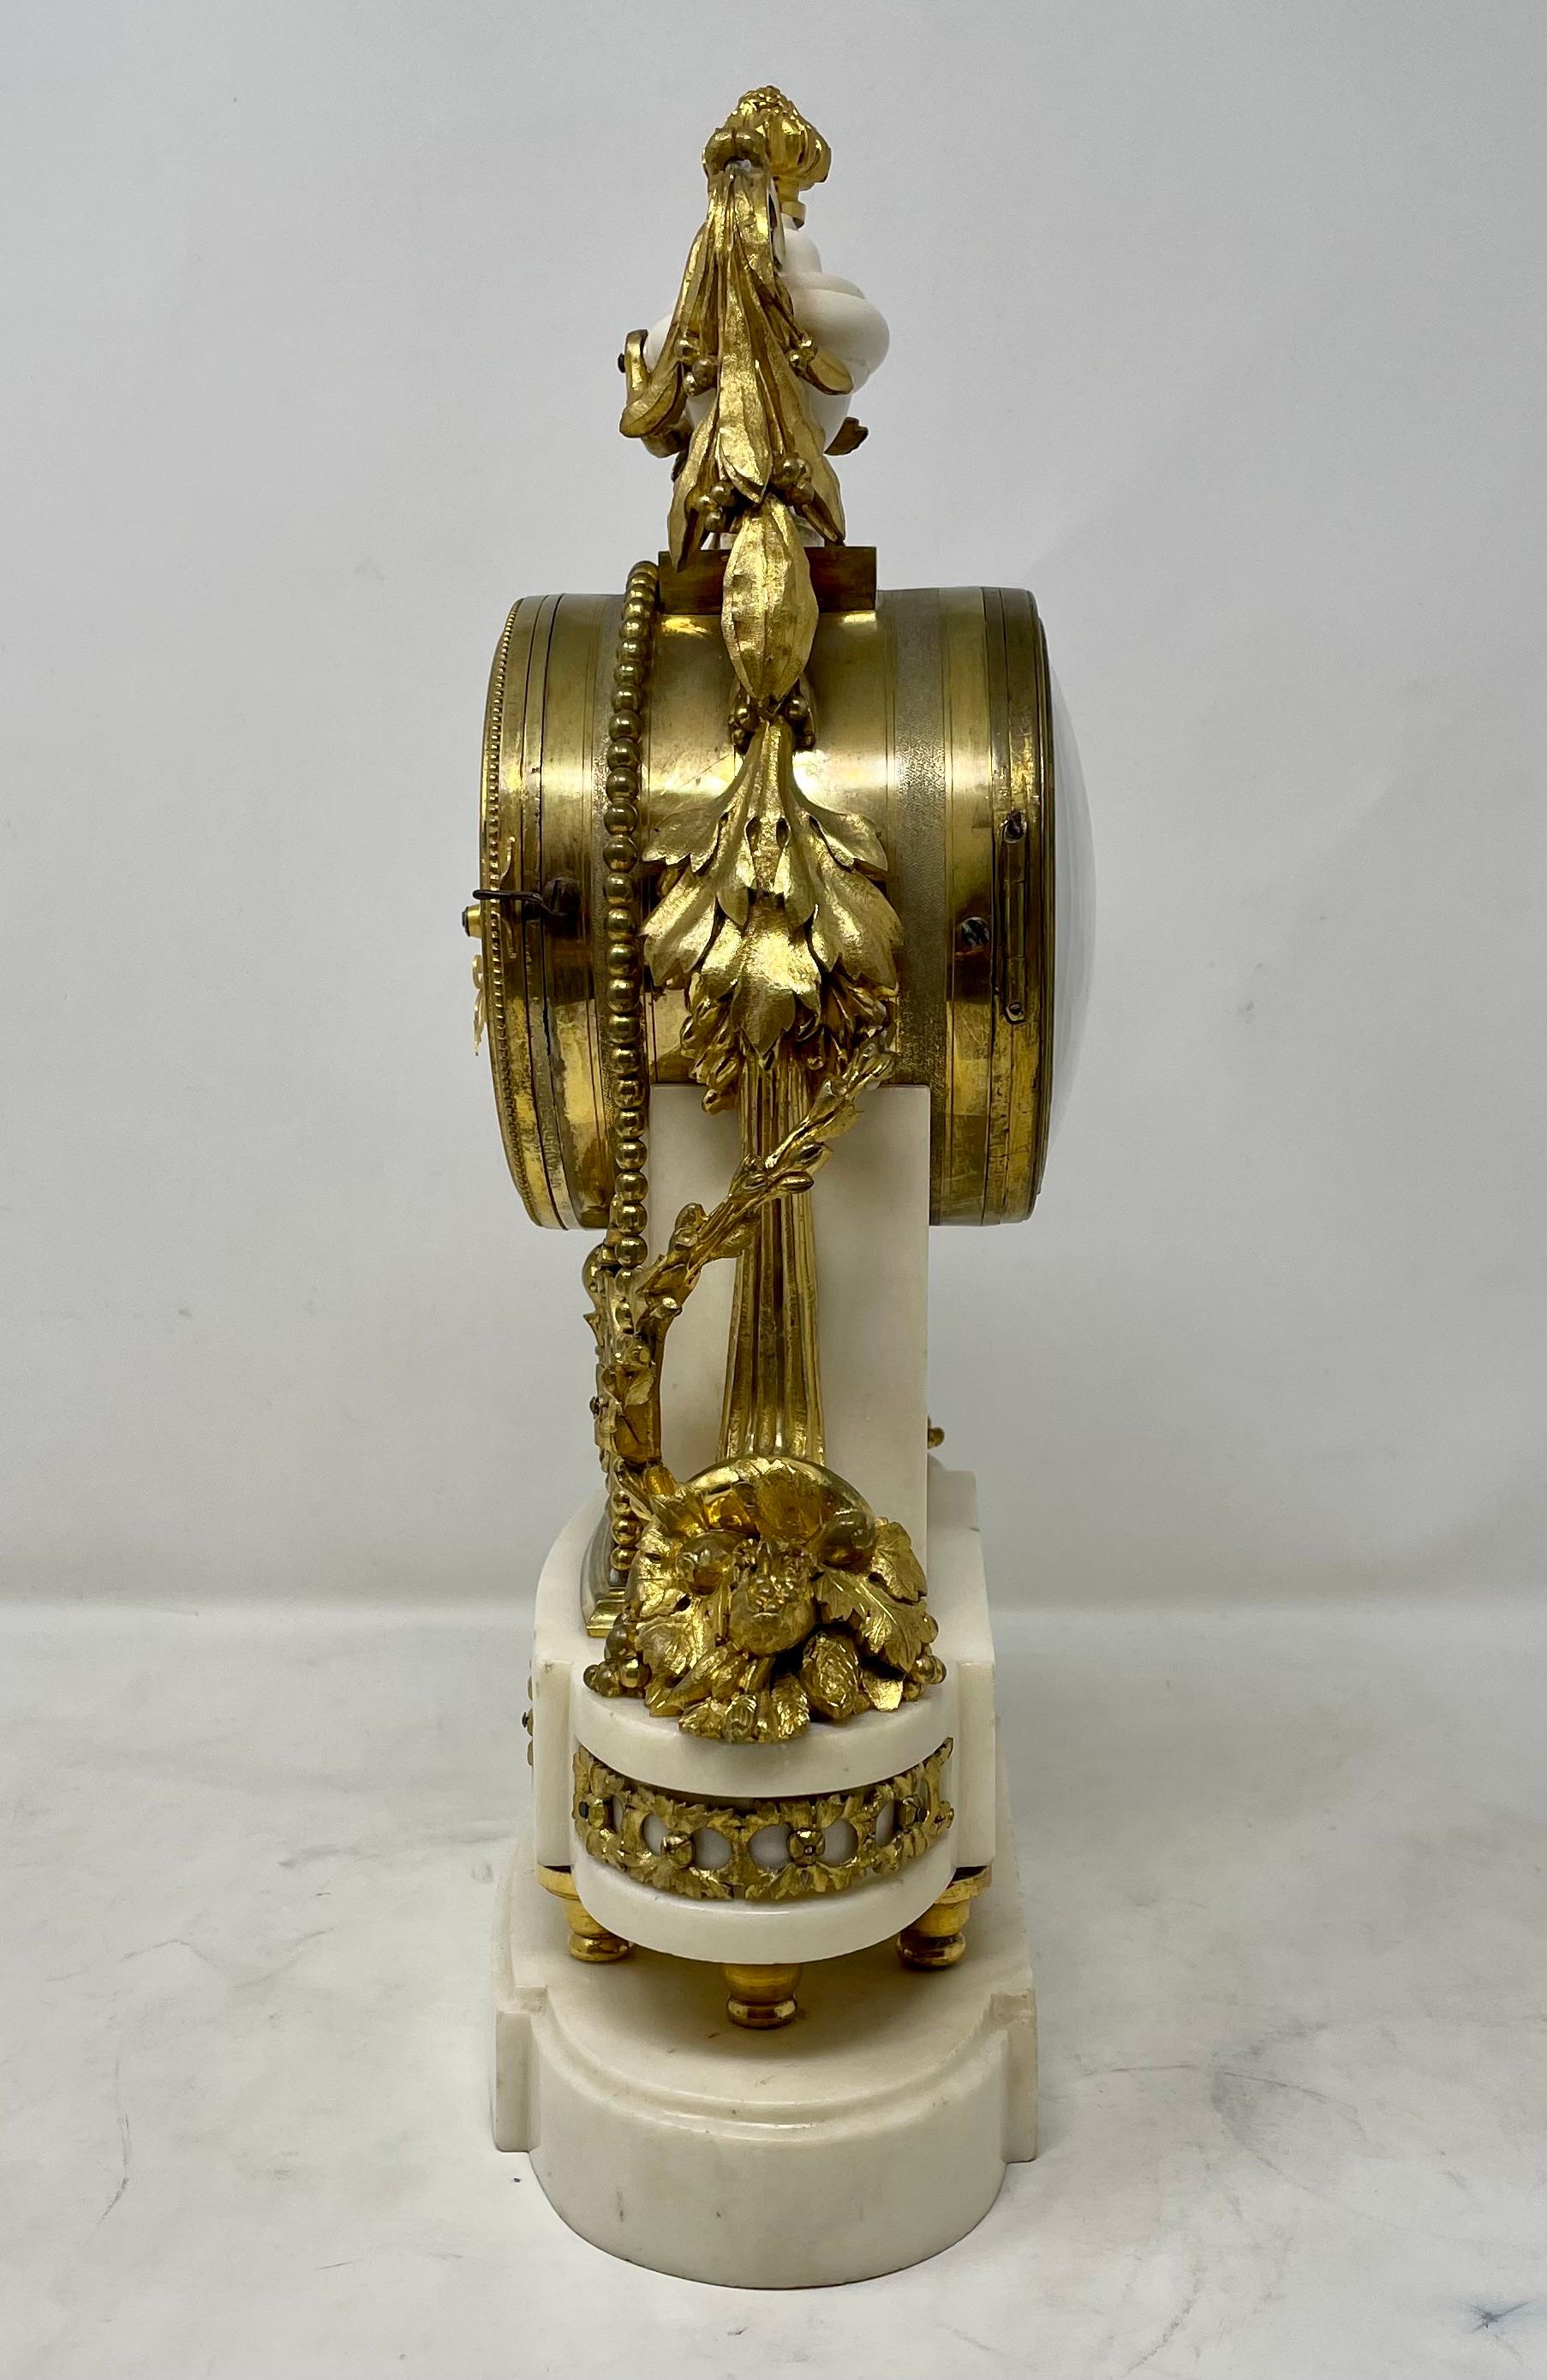 Antique French Louis XVI carrara marble and gold bronze mantel clock, circa 1880.